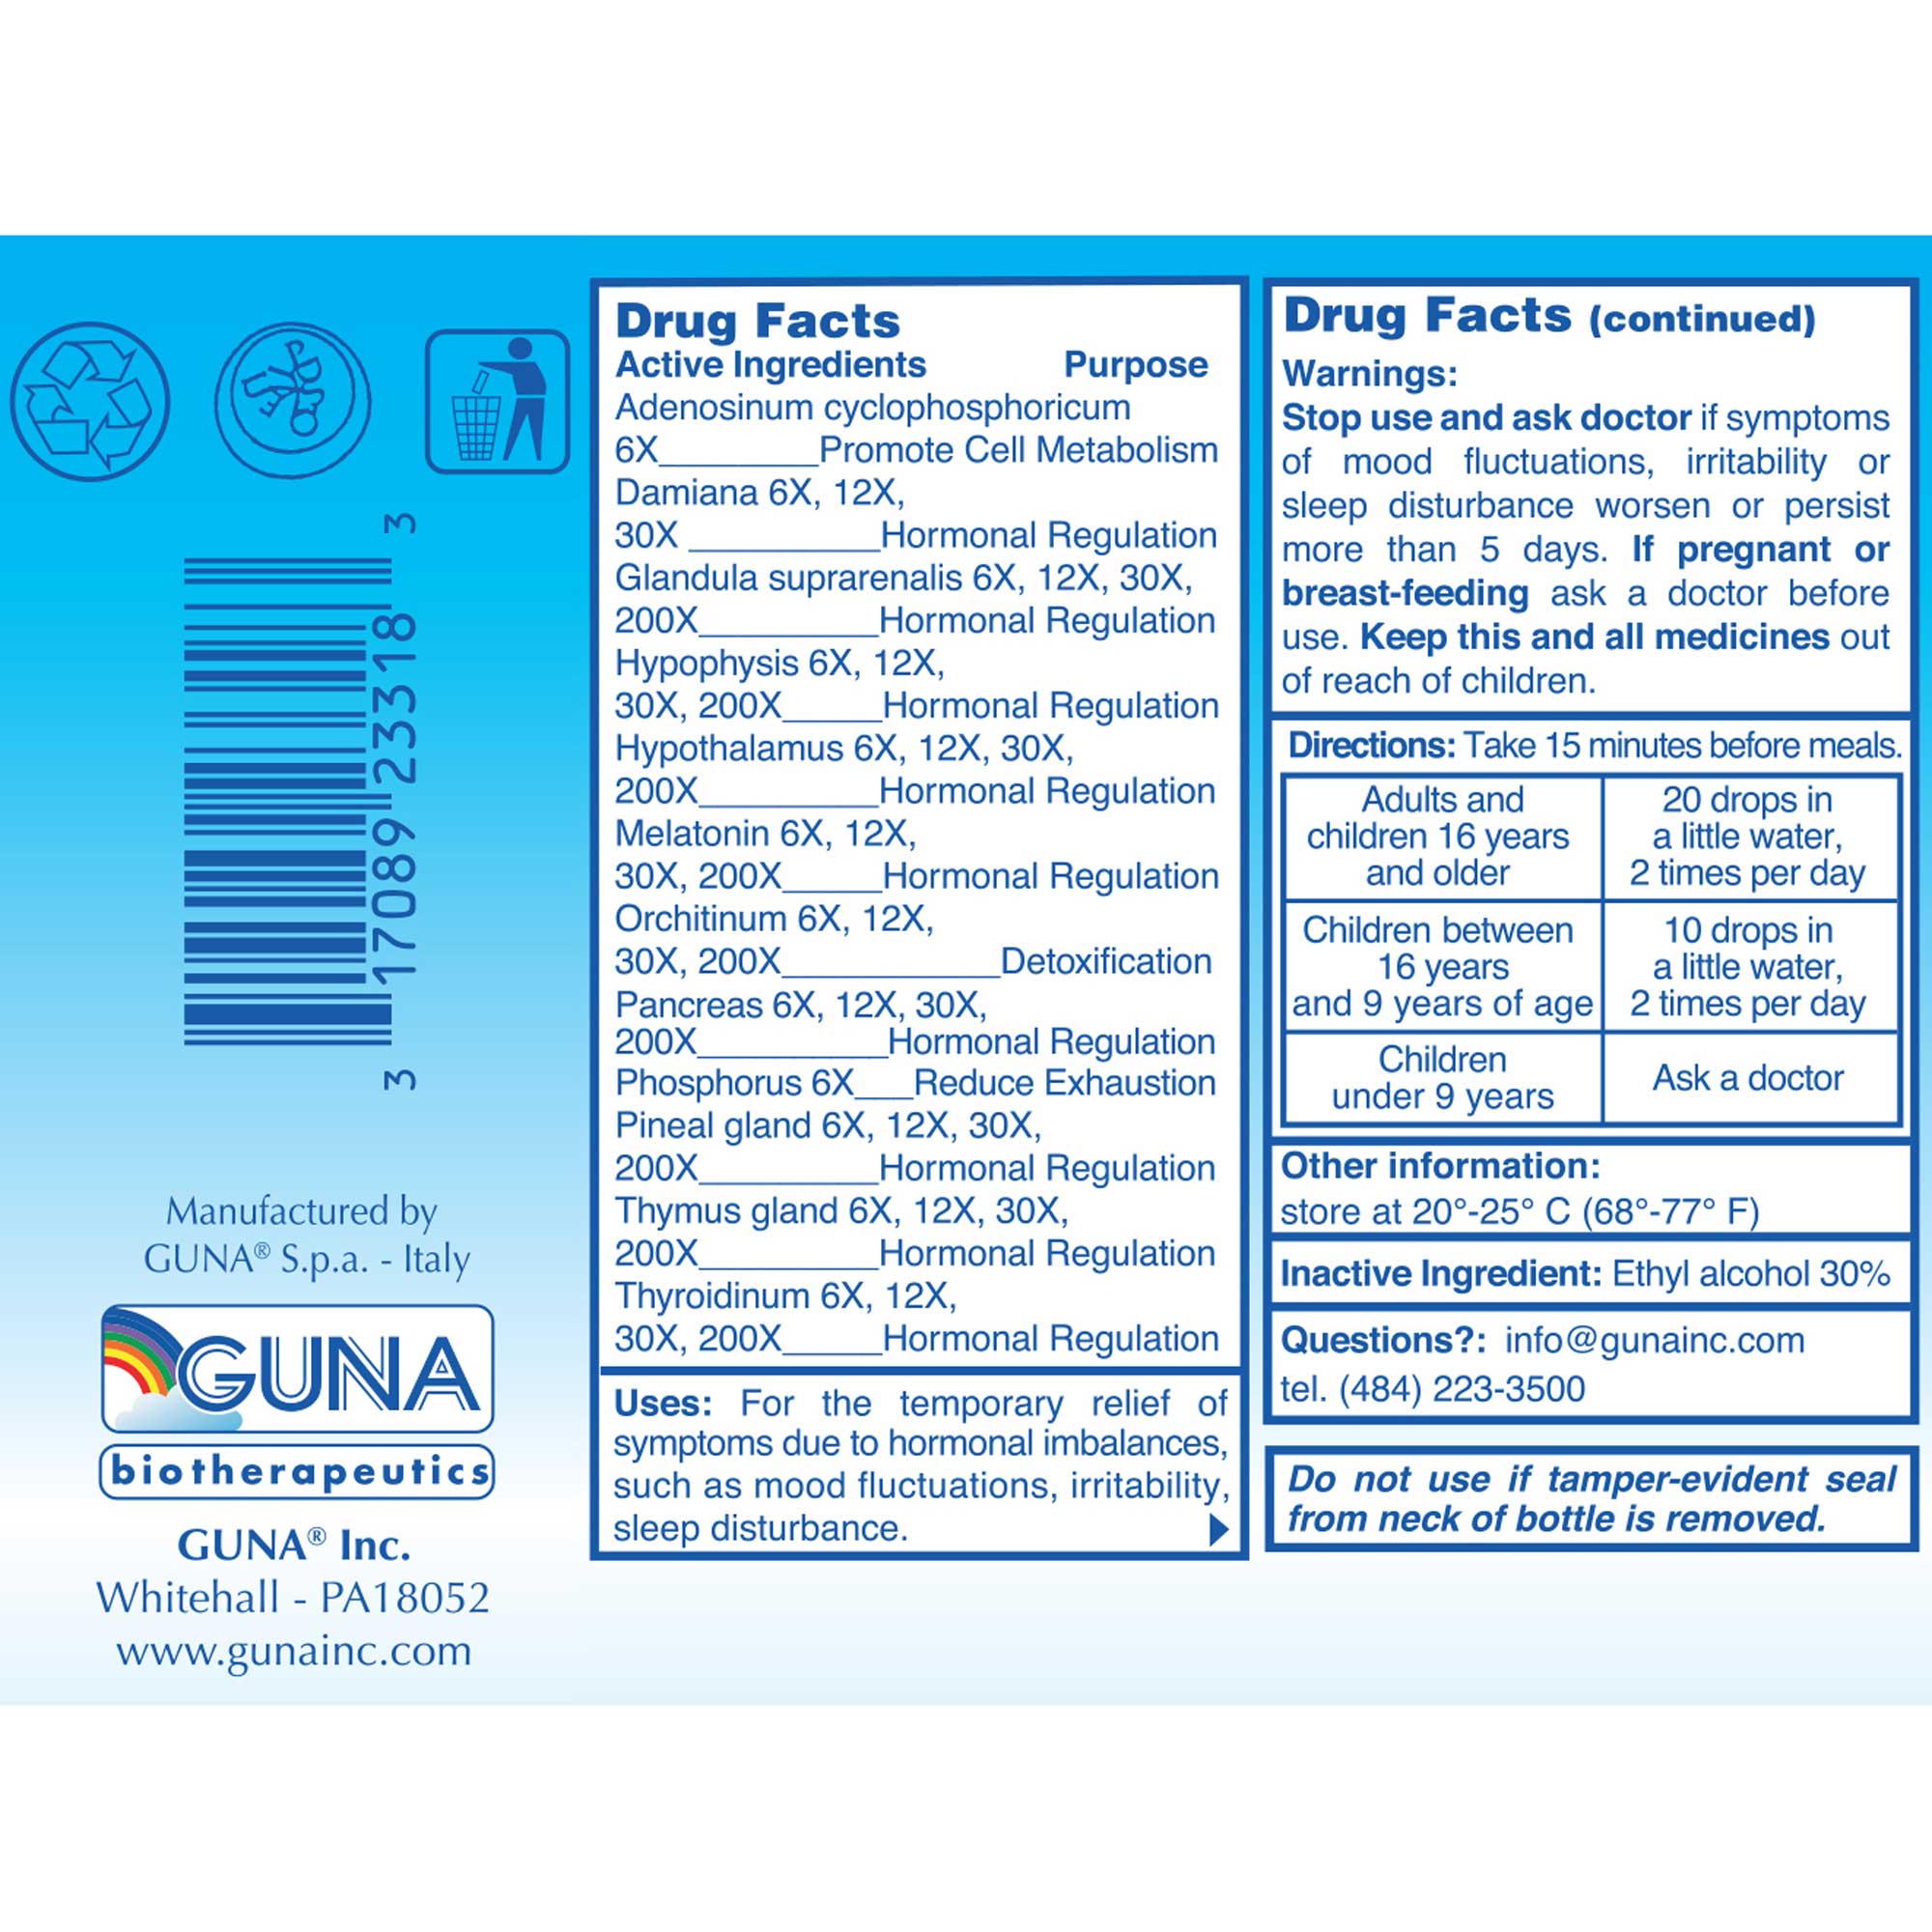 GUNA Biotherapeutics GUNA-Male Ingredients